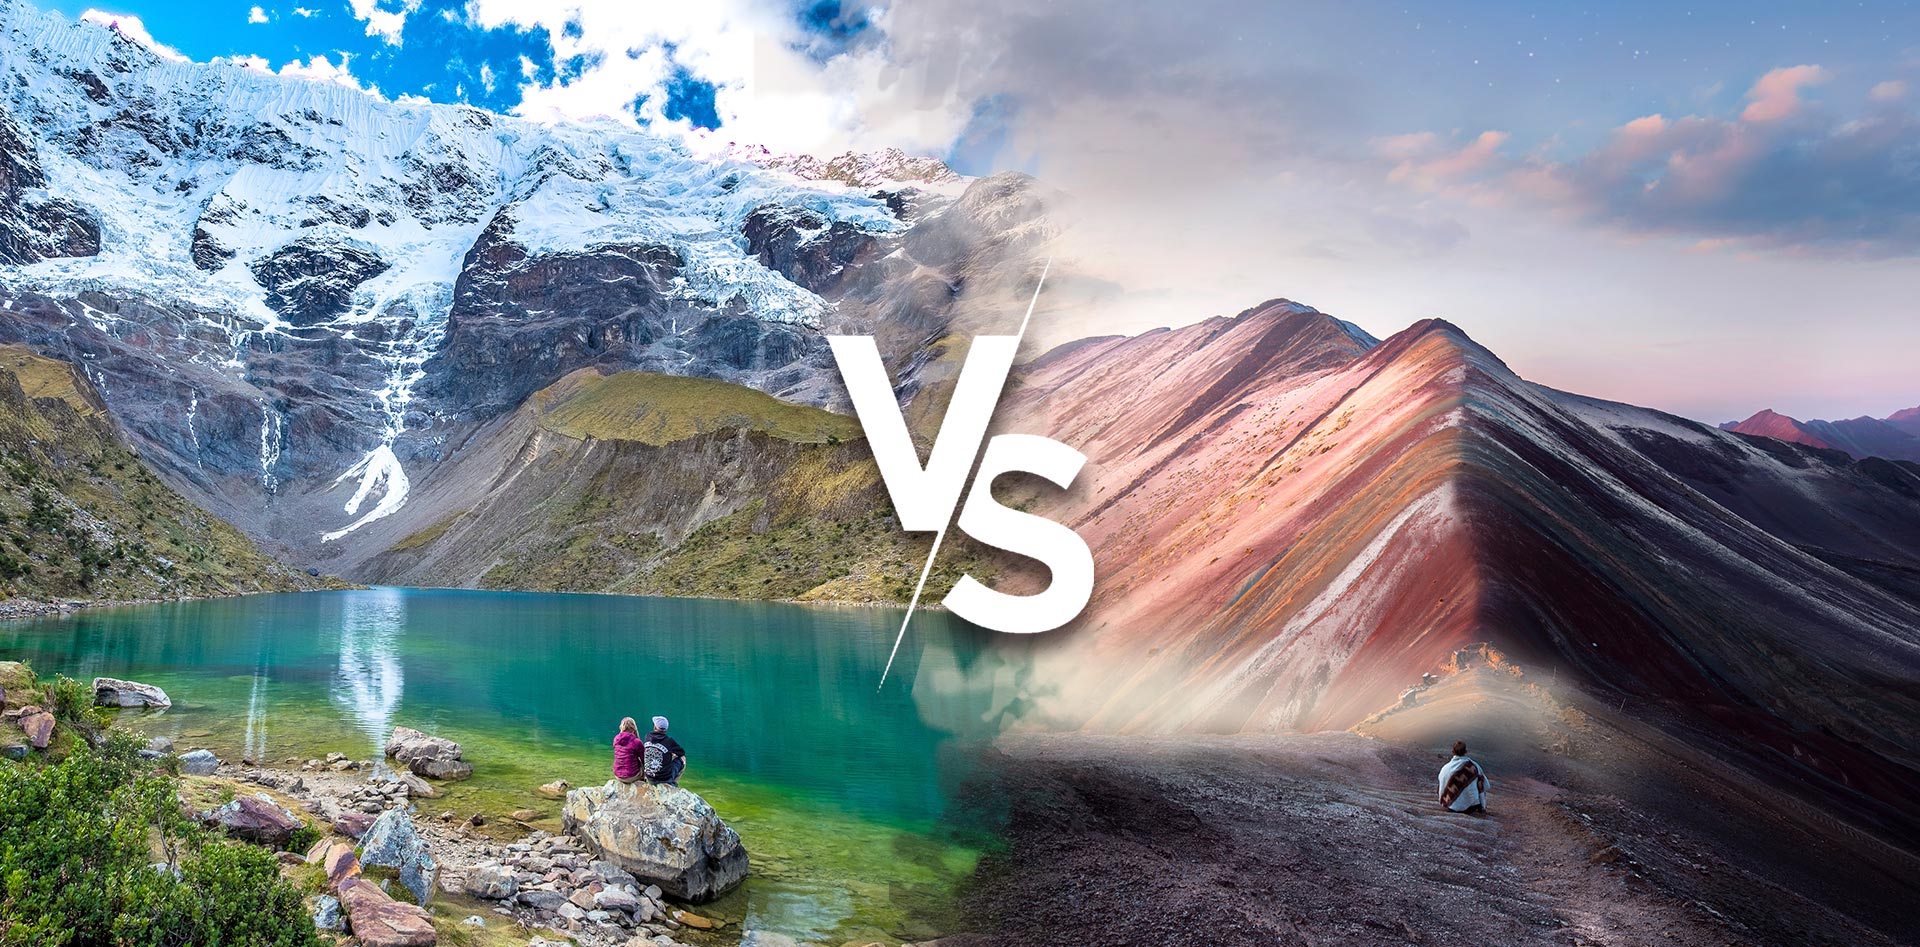 Comparison of Humantay Lake vs Rainbow Mountain